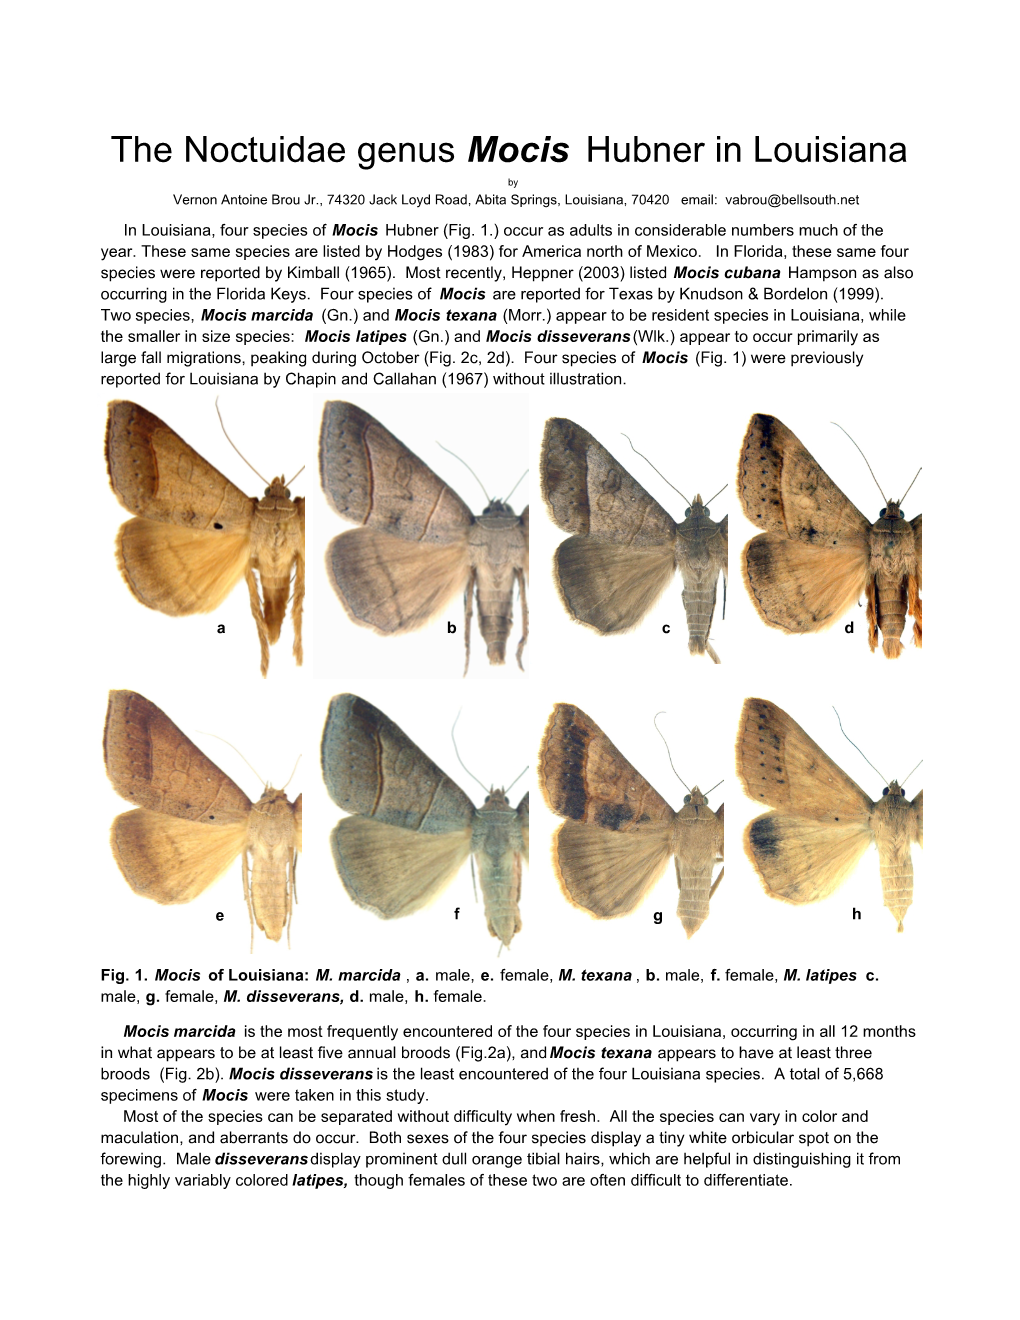 The Noctuidae Genus Mocis Hubner in Louisiana